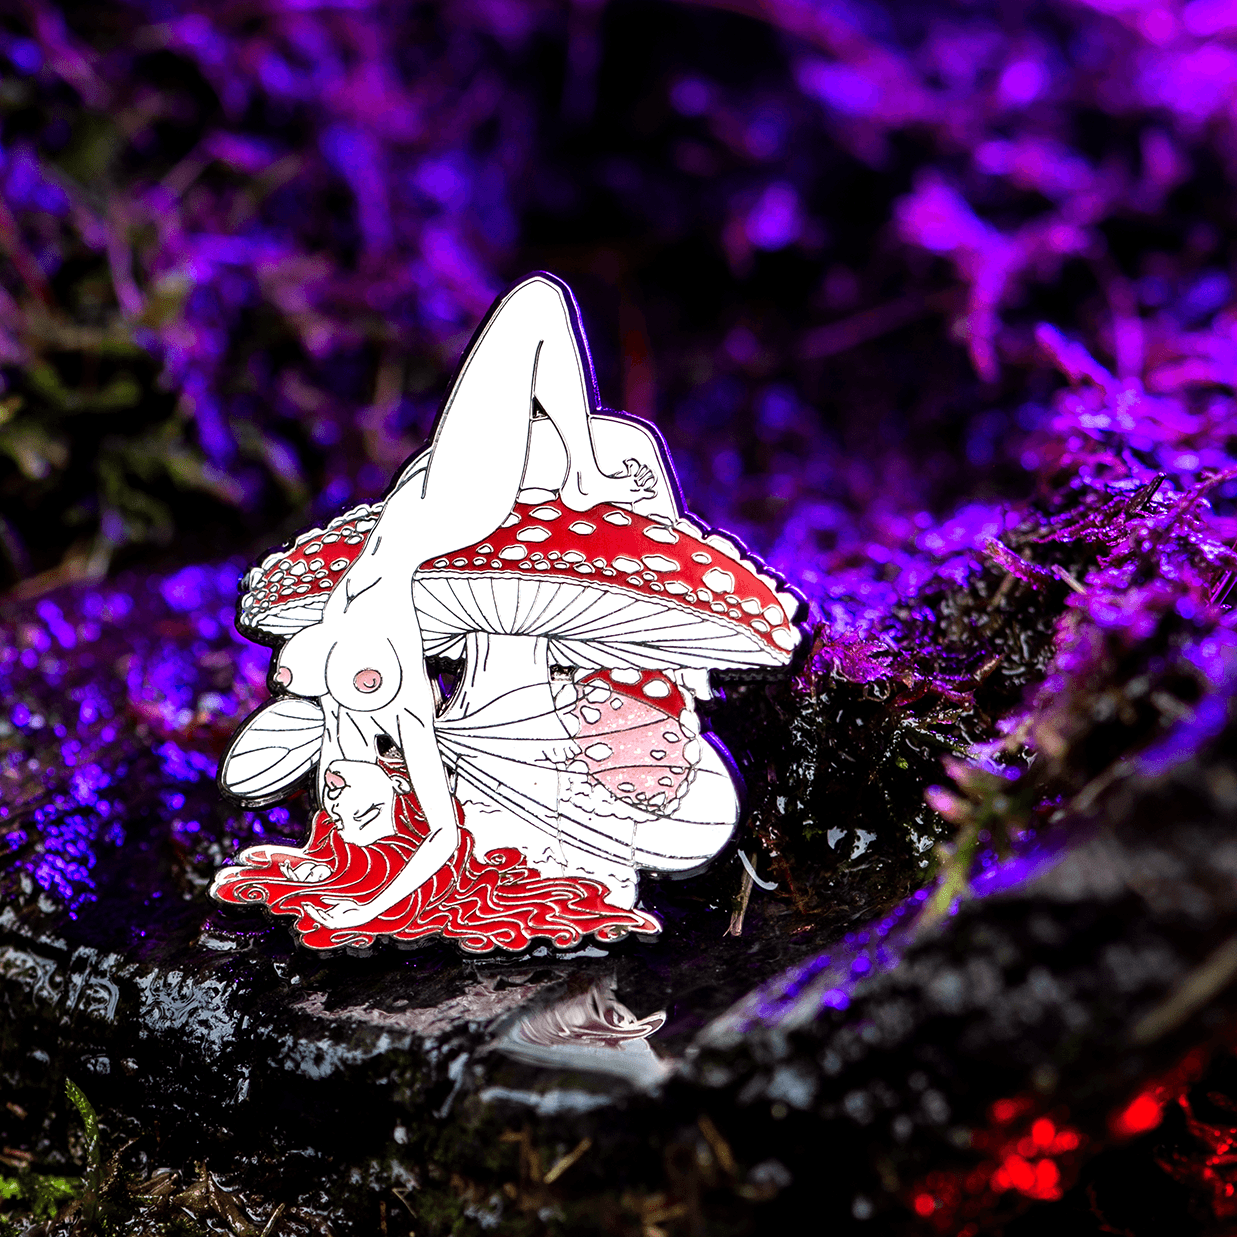 Natasha Fairy & Mushrooms Pin by The Roving House